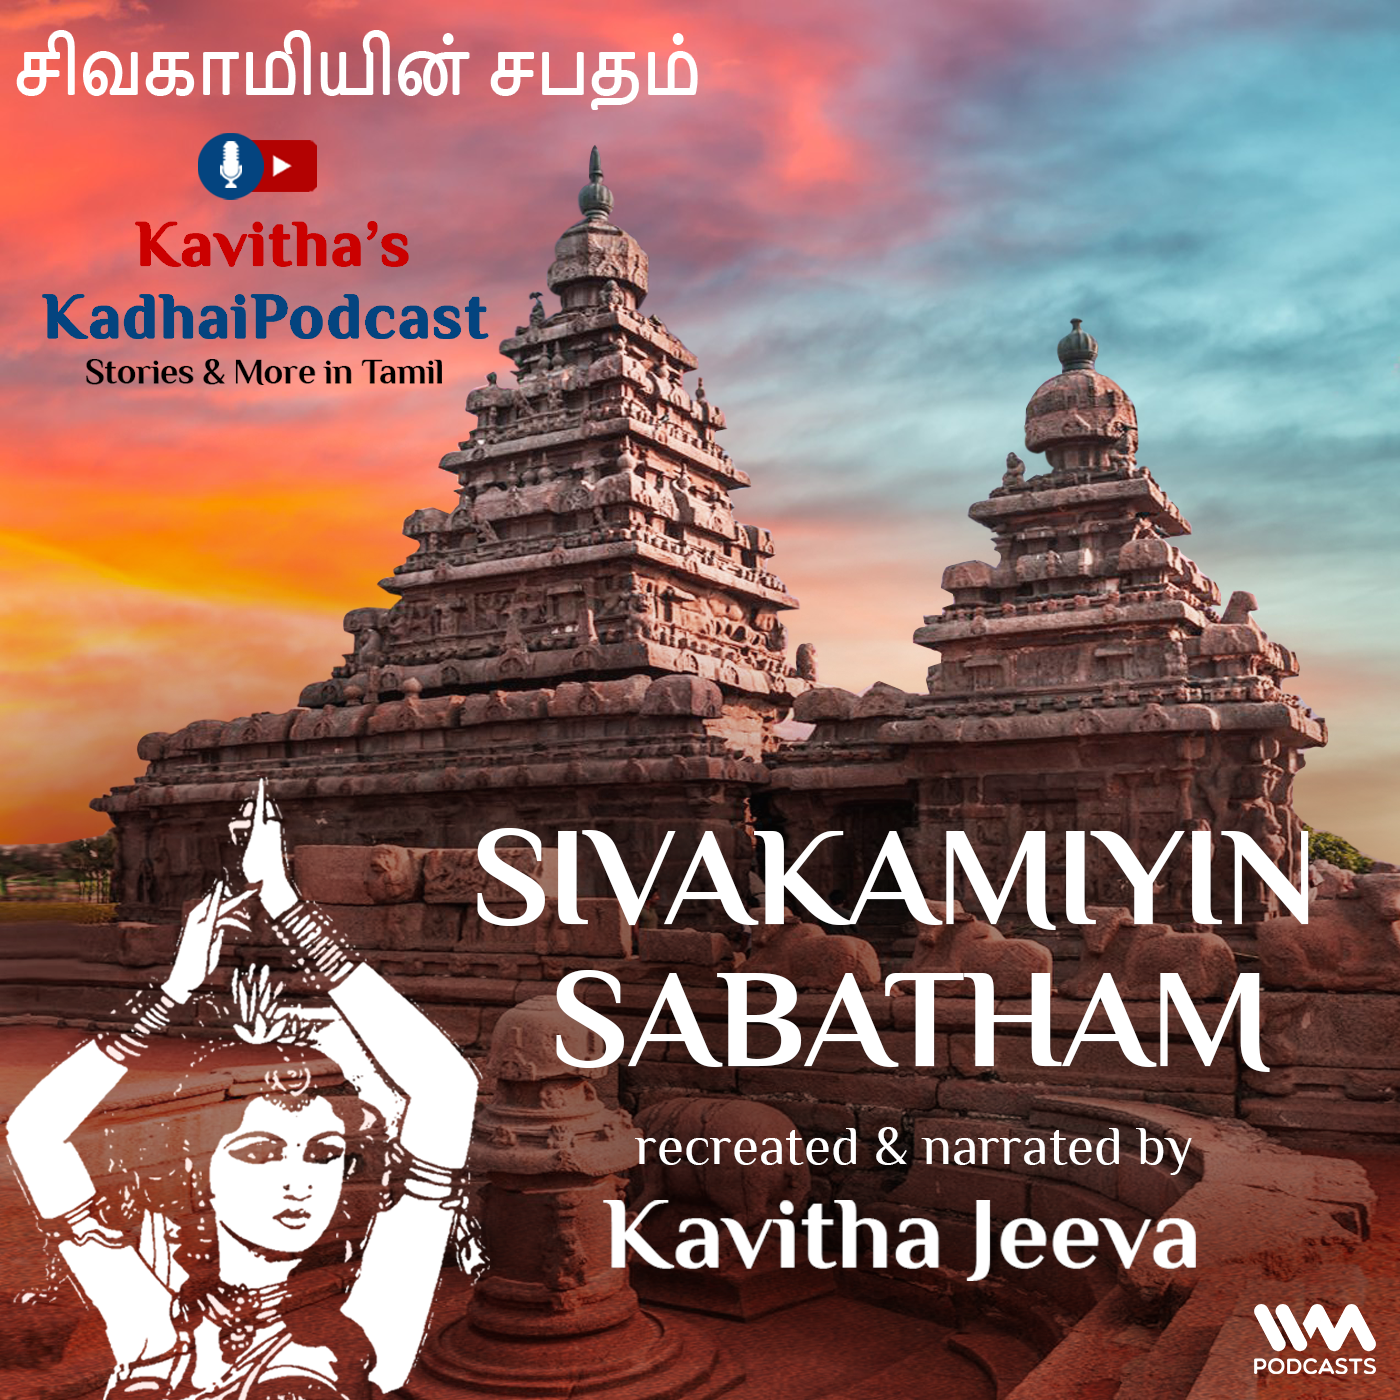 KadhaiPodcast's Sivakamiyin Sabatham with Kavitha Jeeva - Episode #97